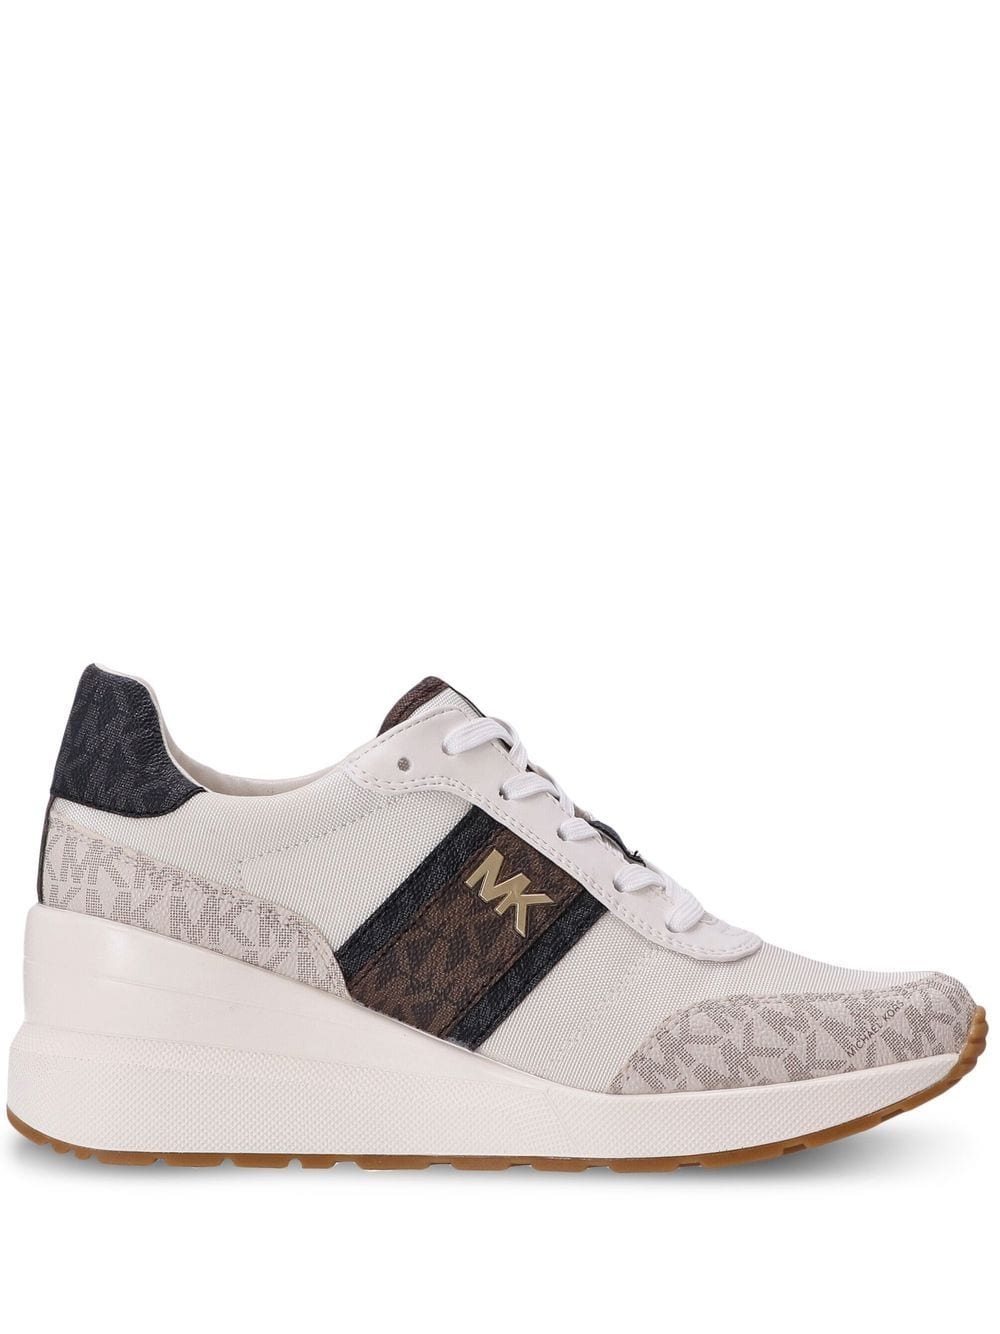 Michael Kors Mabel Monogram Platform Sneakers - Farfetch